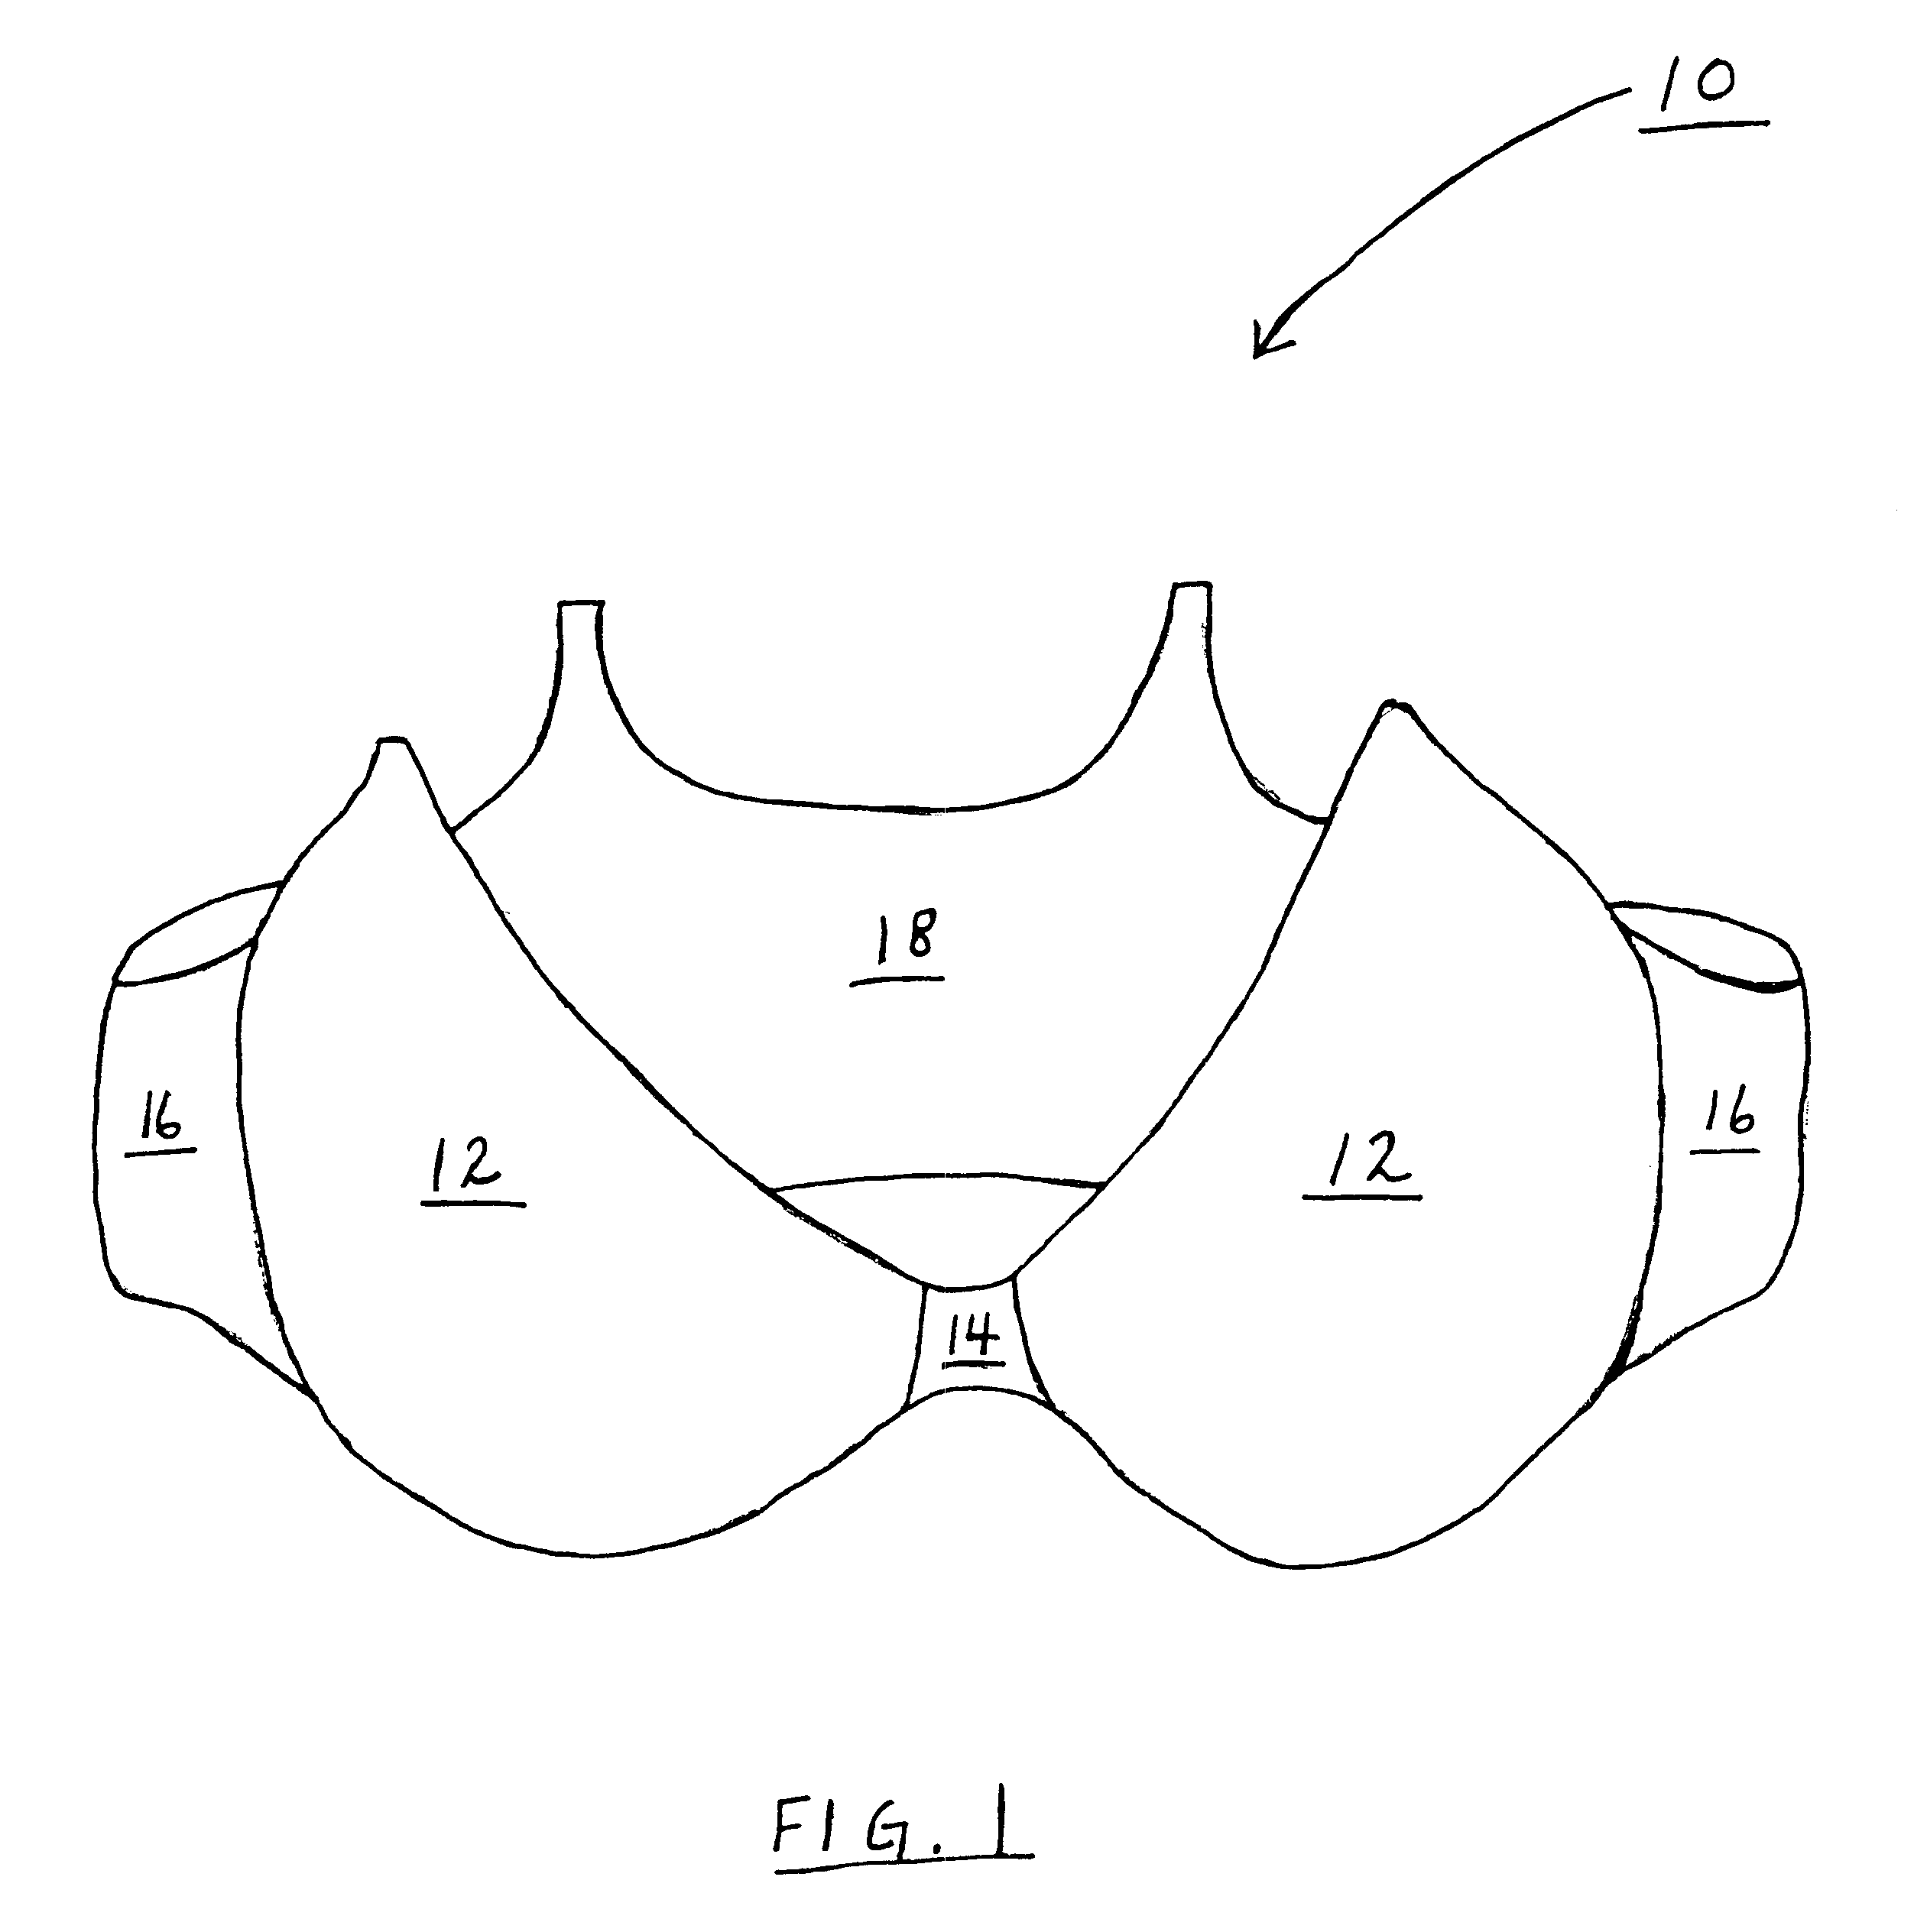 Modular brassiere fitment apparatus